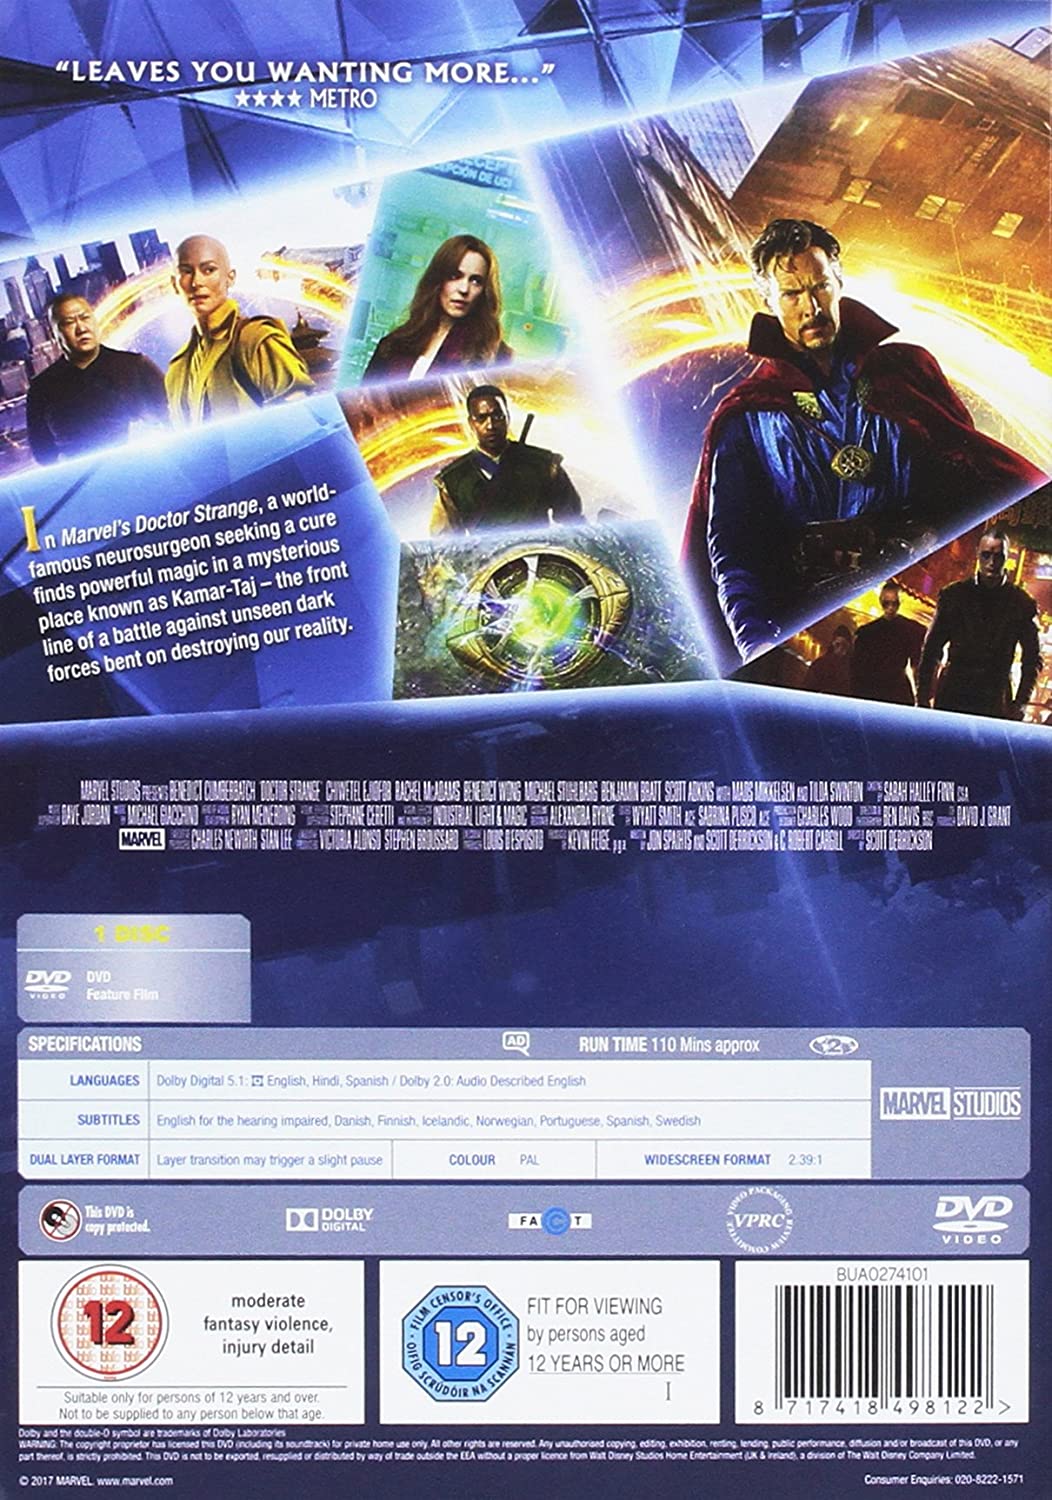 The Incredible Hulk [DVD] & Marvel's Doctor Strange [DVD] [2016]